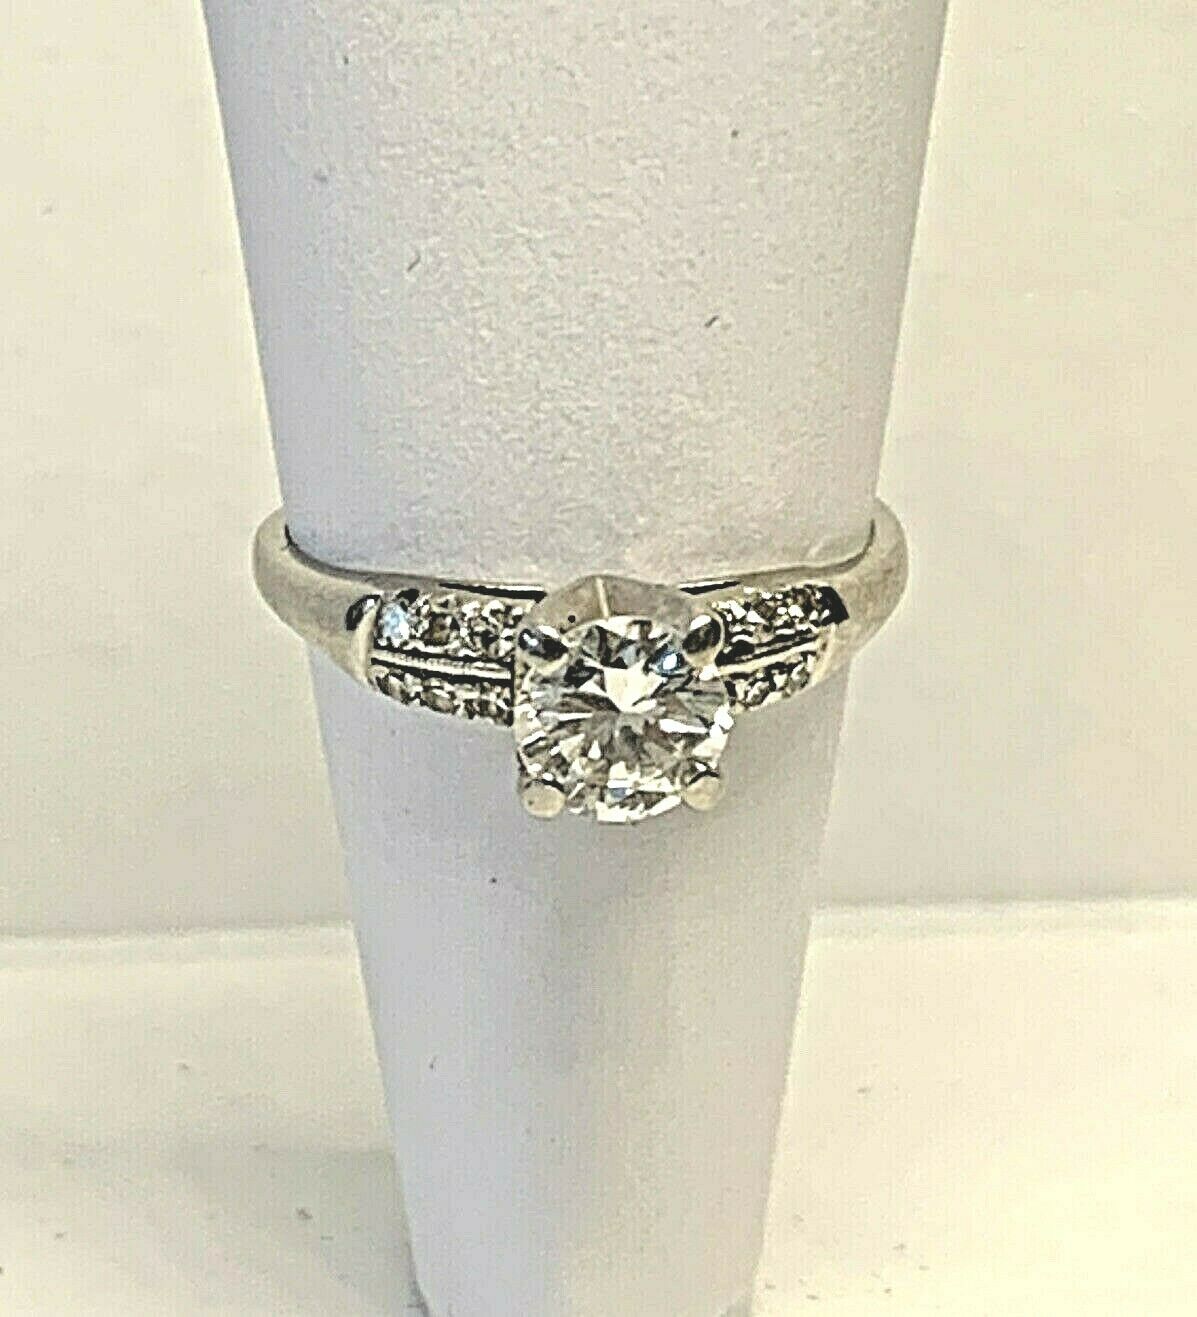 Platinum Diamond Engagement Ring .70 ct. H SI1 Center Size 6